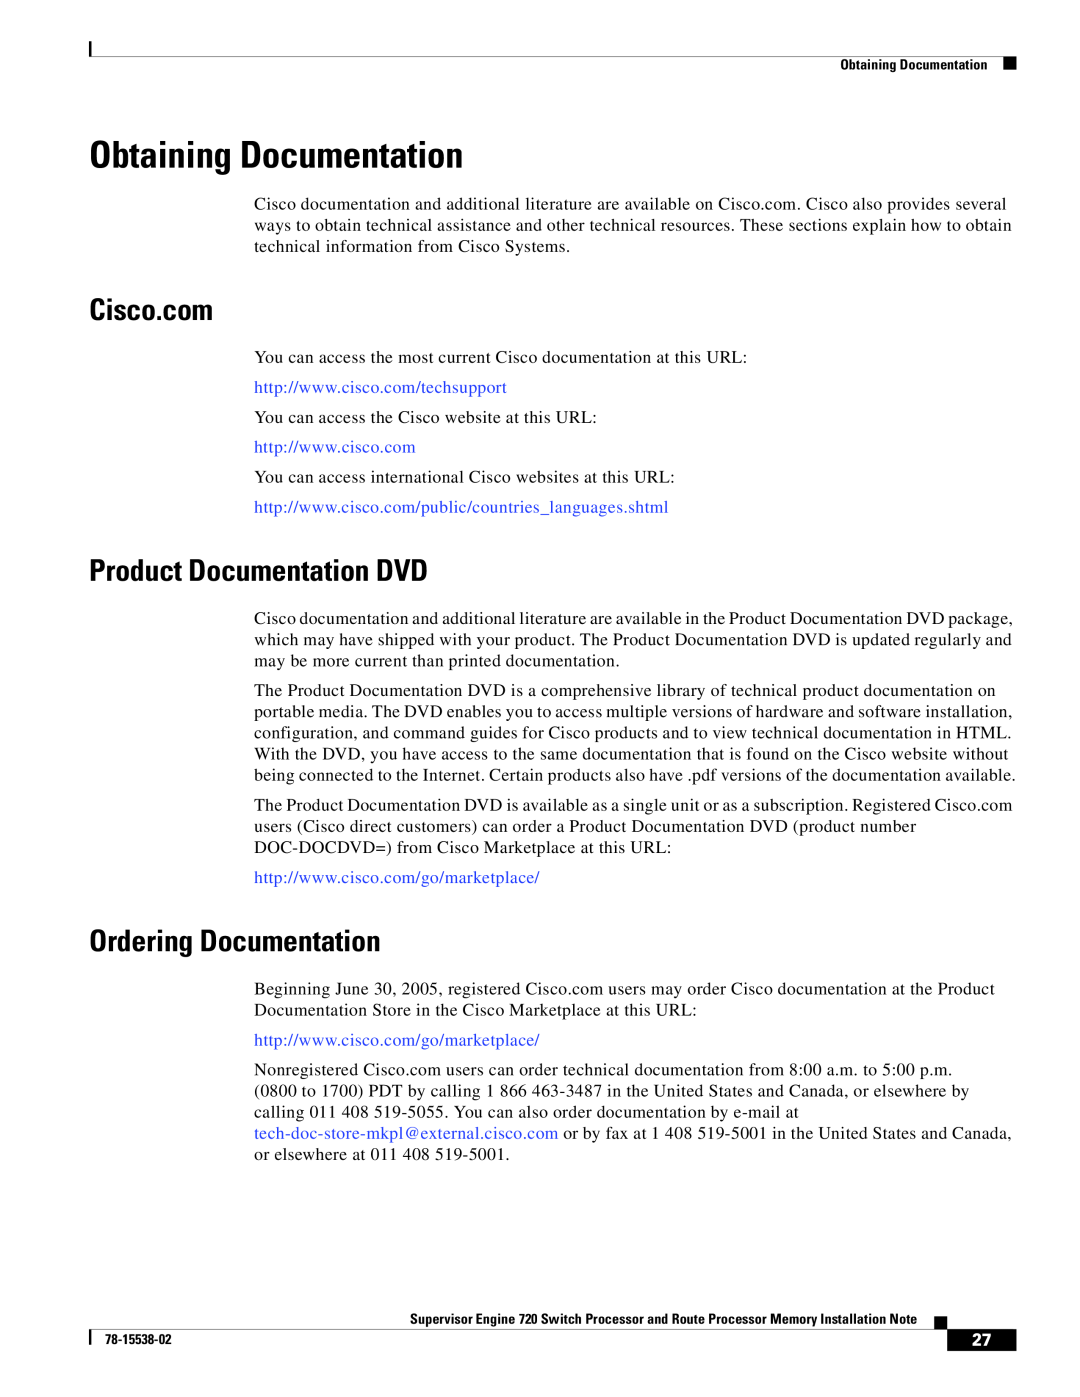 Cisco Systems MEM-MSFC3-1GB= manual Obtaining Documentation, Cisco.com, Product Documentation DVD, Ordering Documentation 